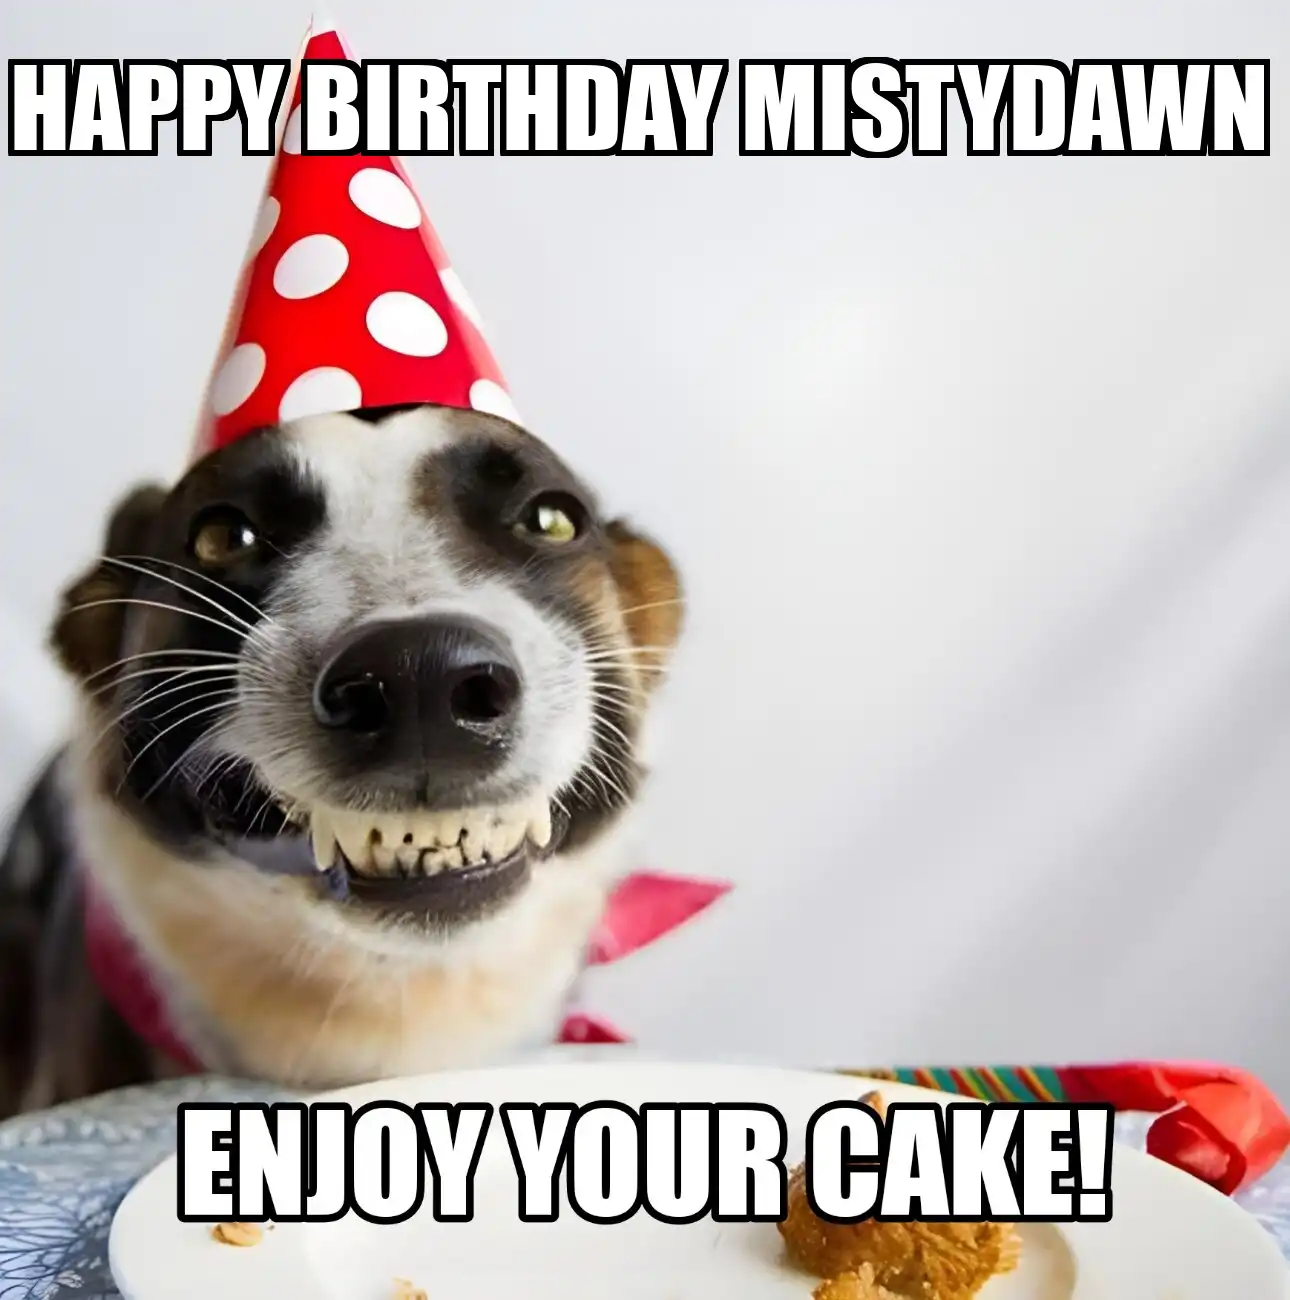 Happy Birthday Mistydawn Enjoy Your Cake Dog Meme